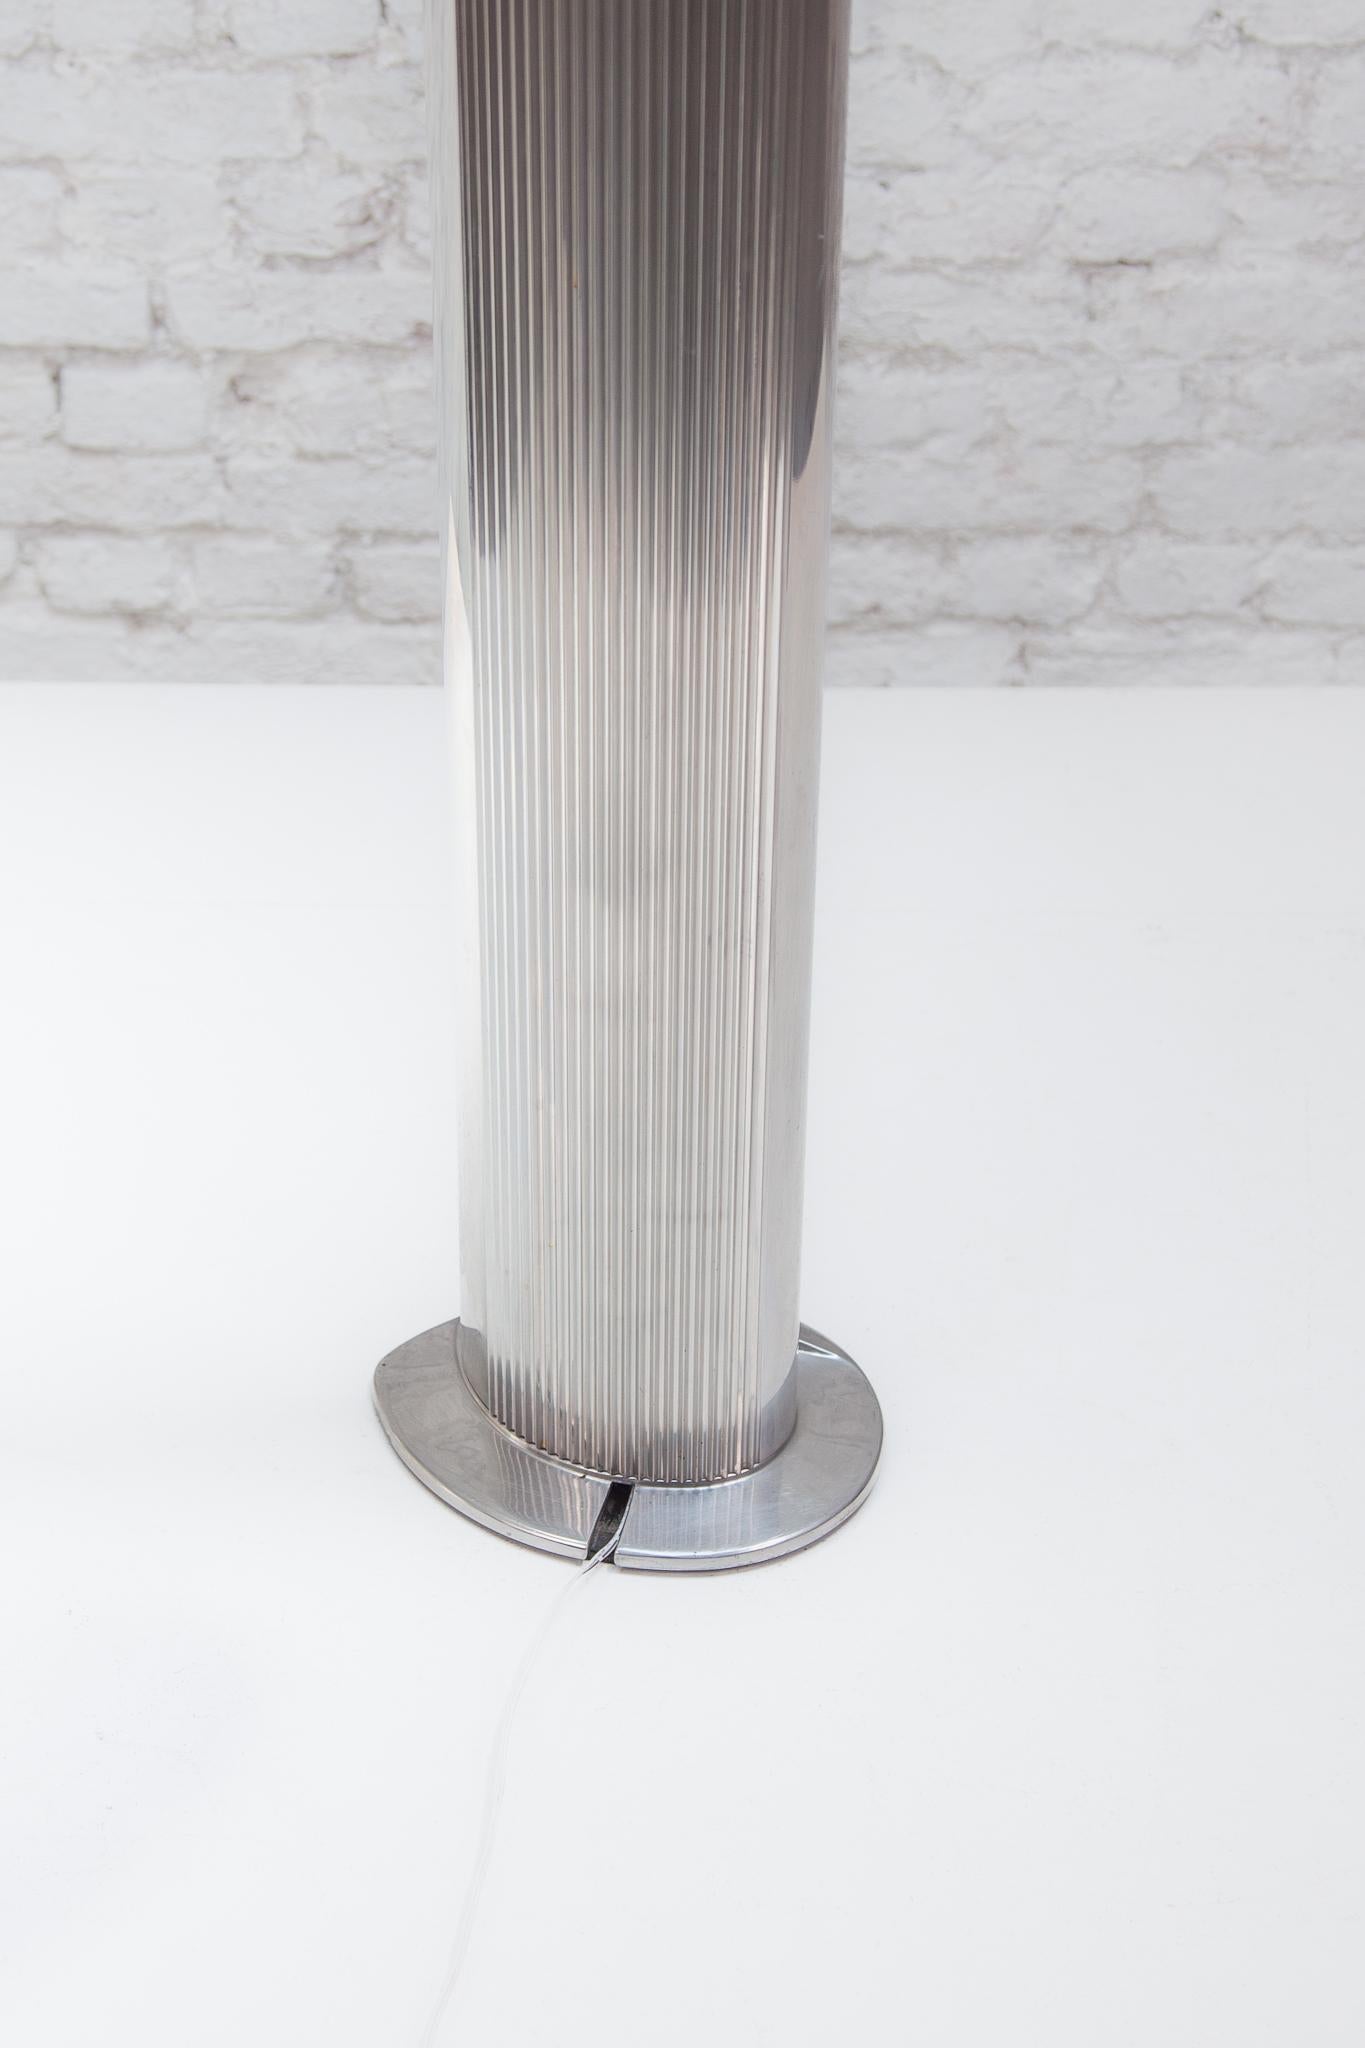 Aluminum 1980s Penombra Floor Lamp by Antoni Flores for Sargot Barcelona For Sale 5